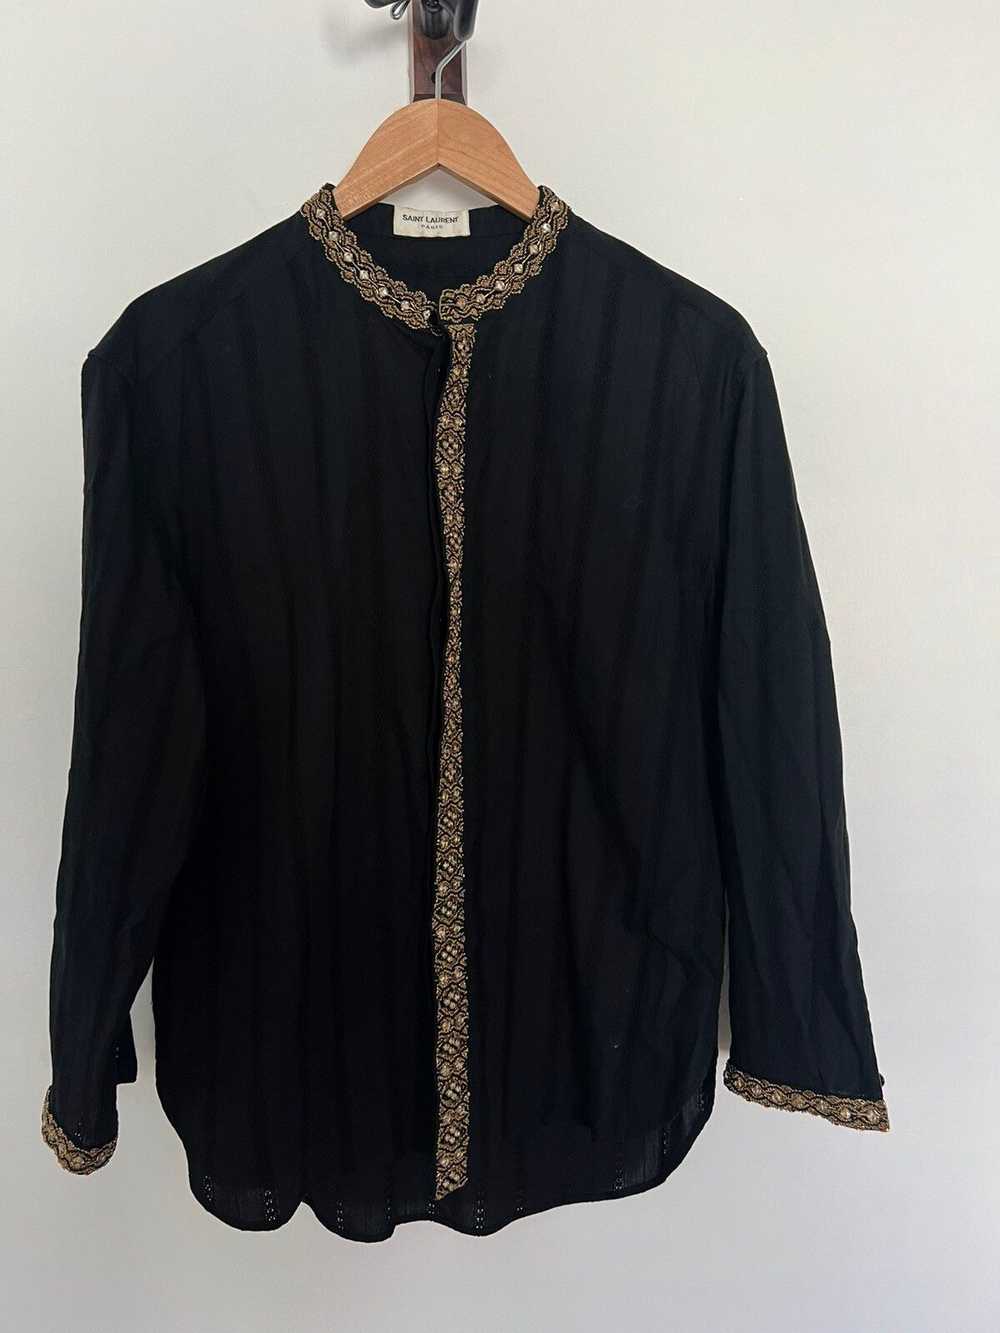 Saint Laurent Paris Embellished tunic shirt - image 1